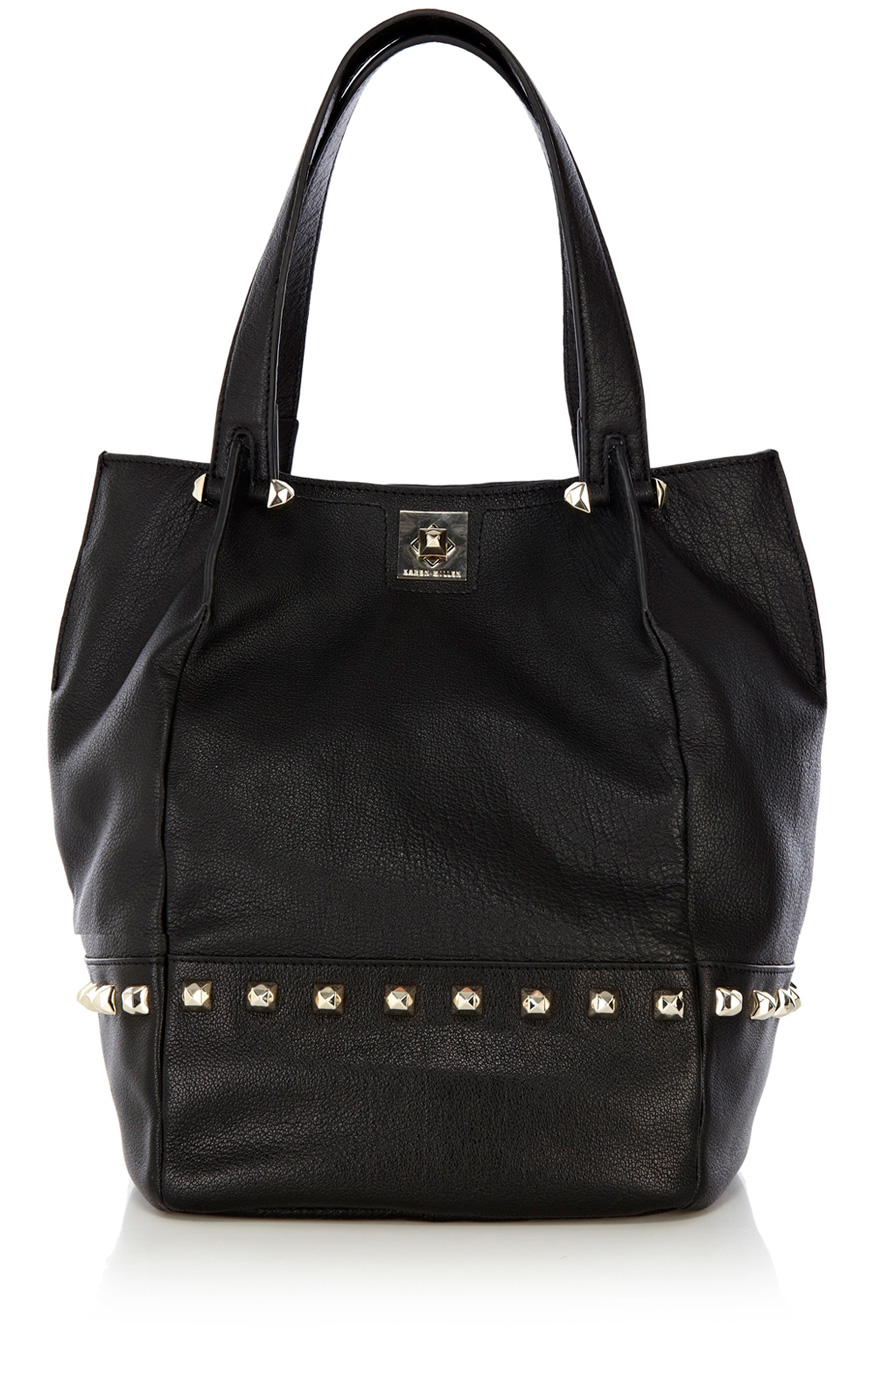 Karen Millen Studded Leather Bucket Bag in Black | Lyst